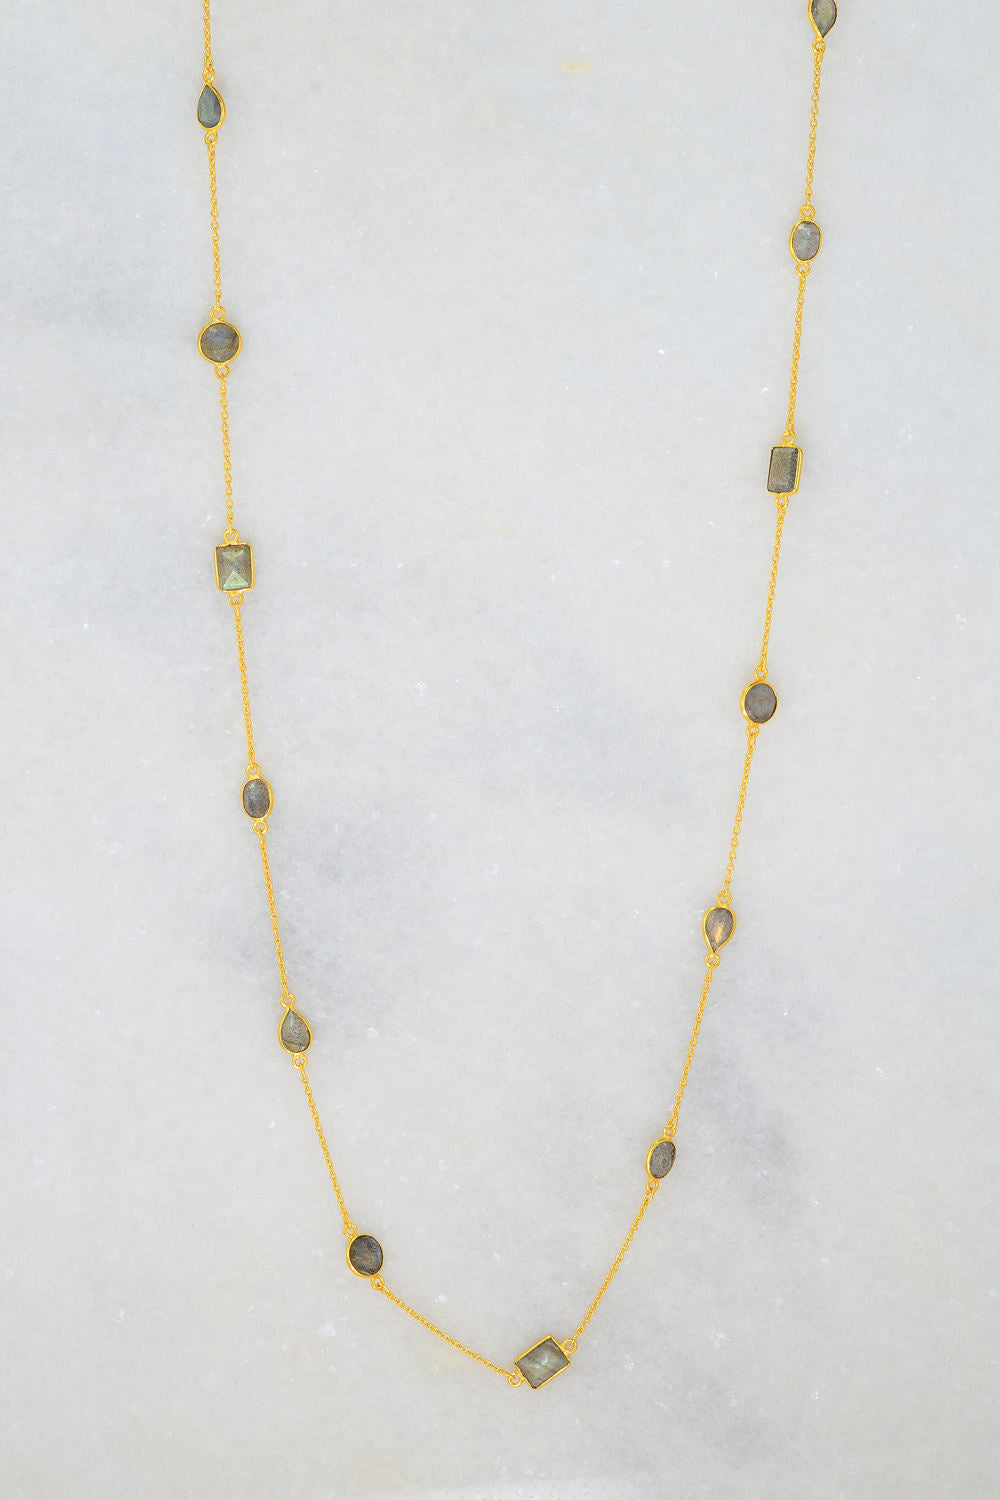 Labradorite Necklace - Multi Layered Necklace - Tiny Gem Necklace - Stationed Necklace - Layering Necklace - Long Necklace - Chain Necklace